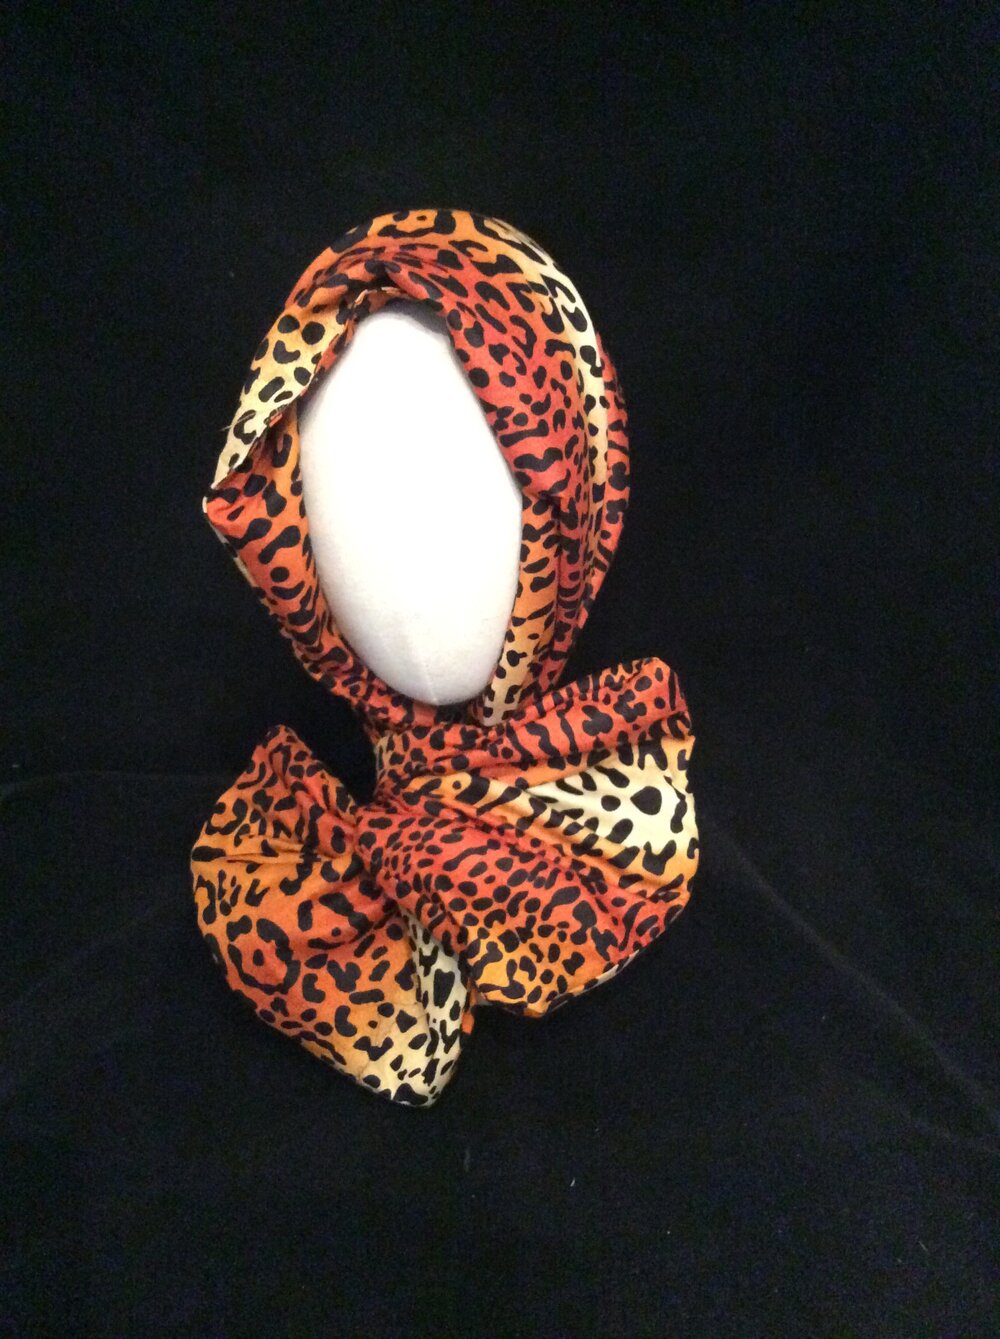 Leopard print: bold colors